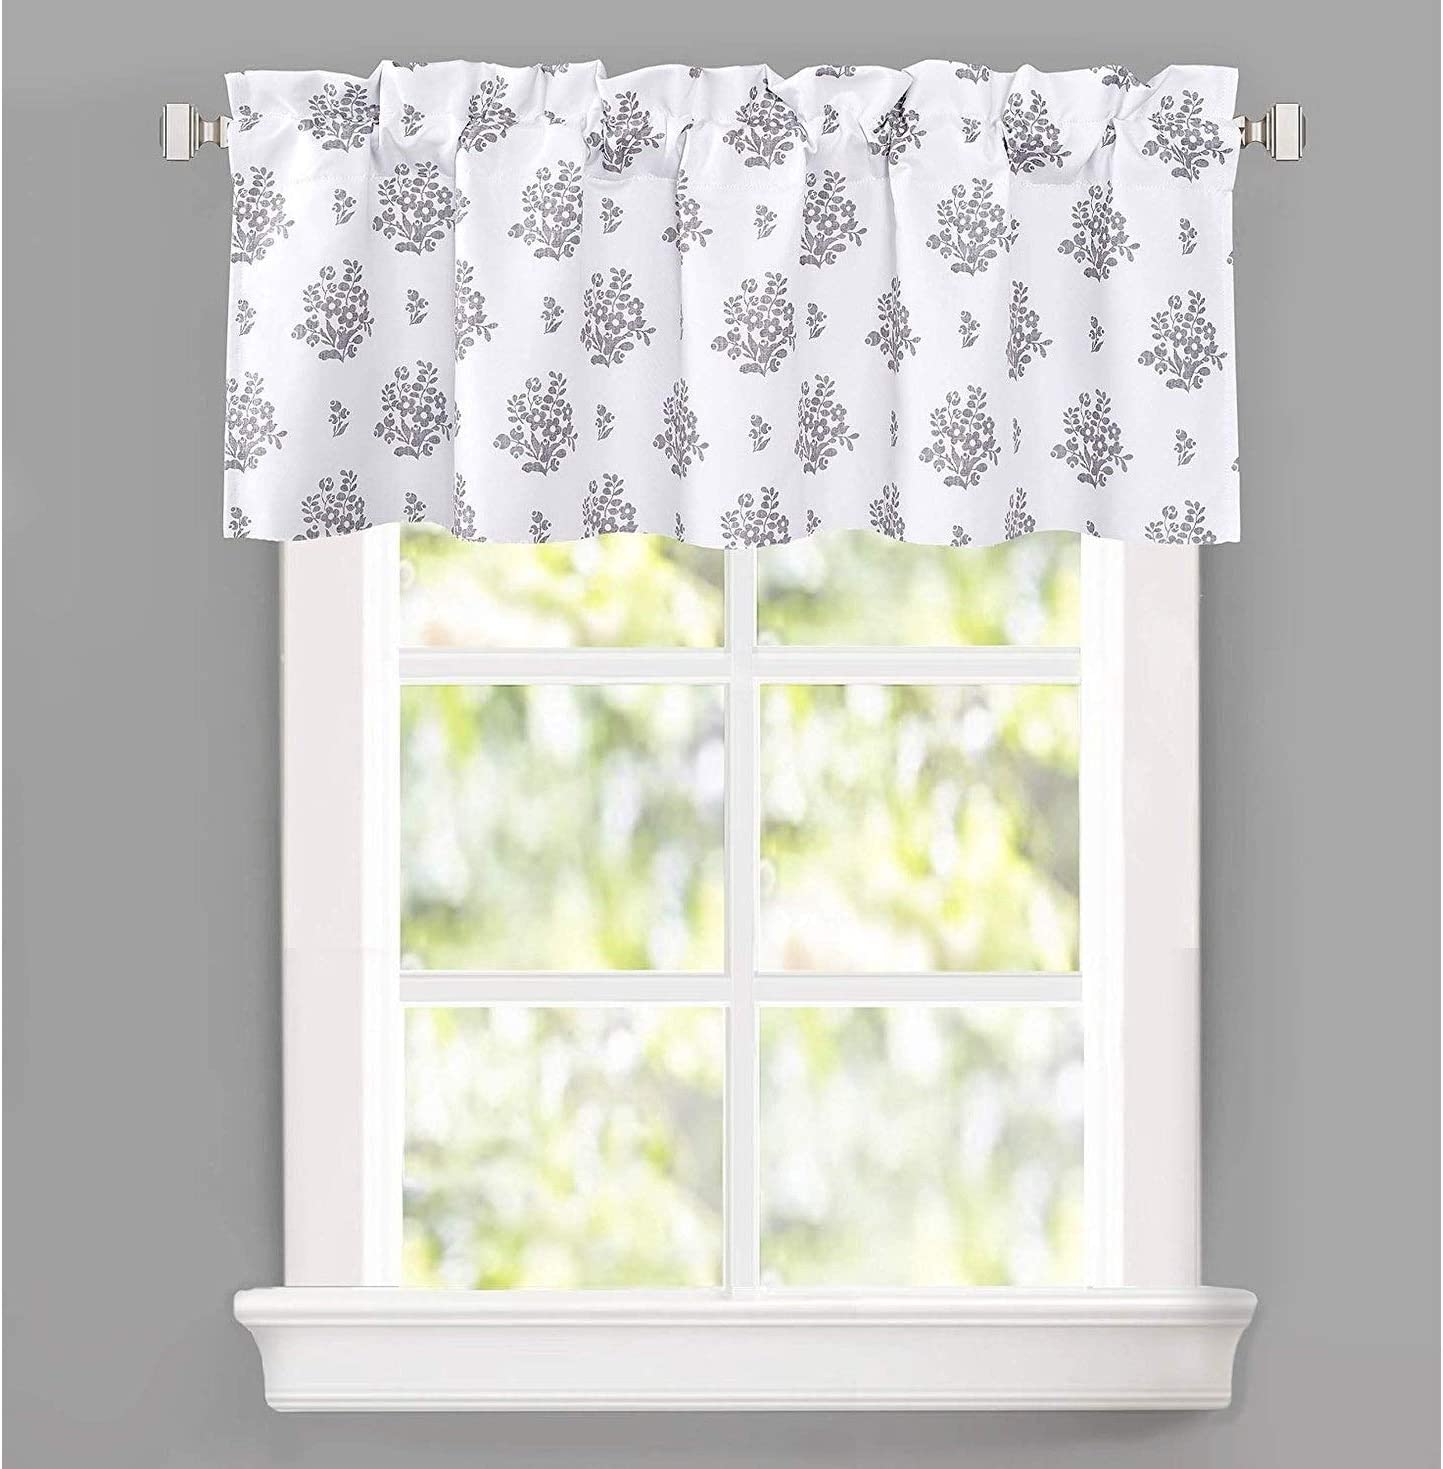 MISC Vintage Floral Botanical Pattern Window Curtain Valance 52'' Width X 18'' Length Grey Farmhouse 100% Polyester Energy Efficient